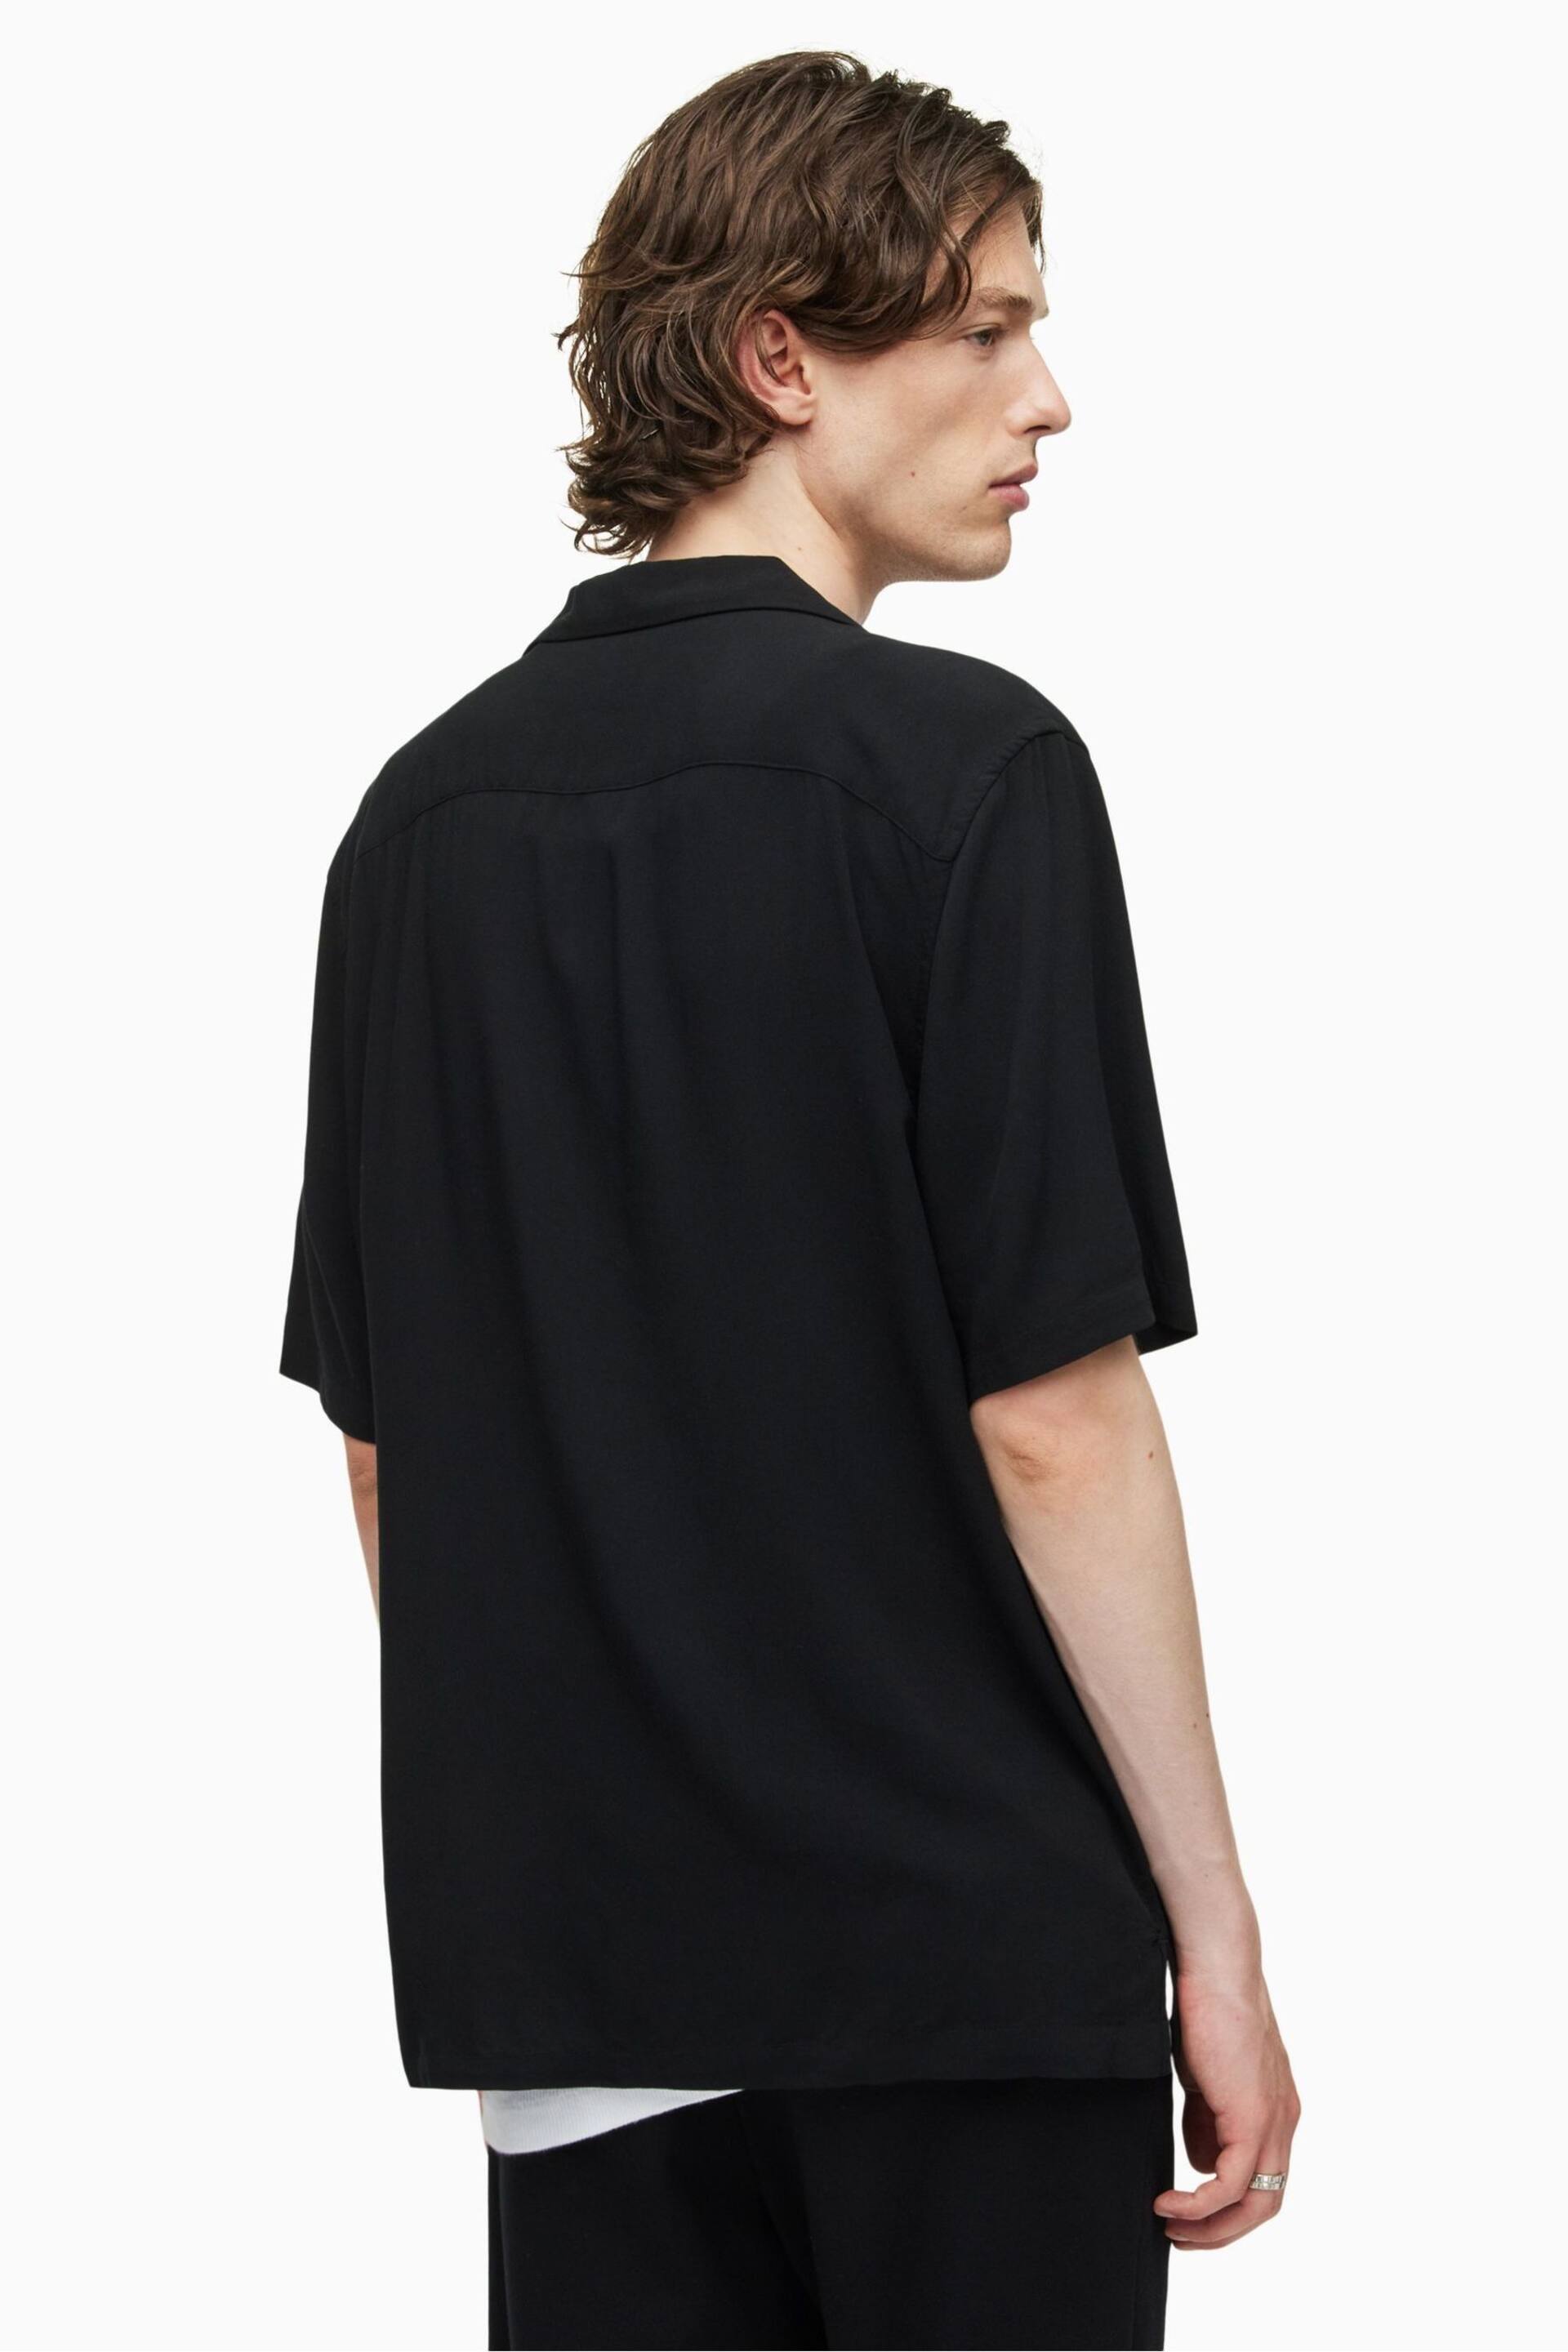 AllSaints Black Venice Short Sleeve Shirt - Image 2 of 4